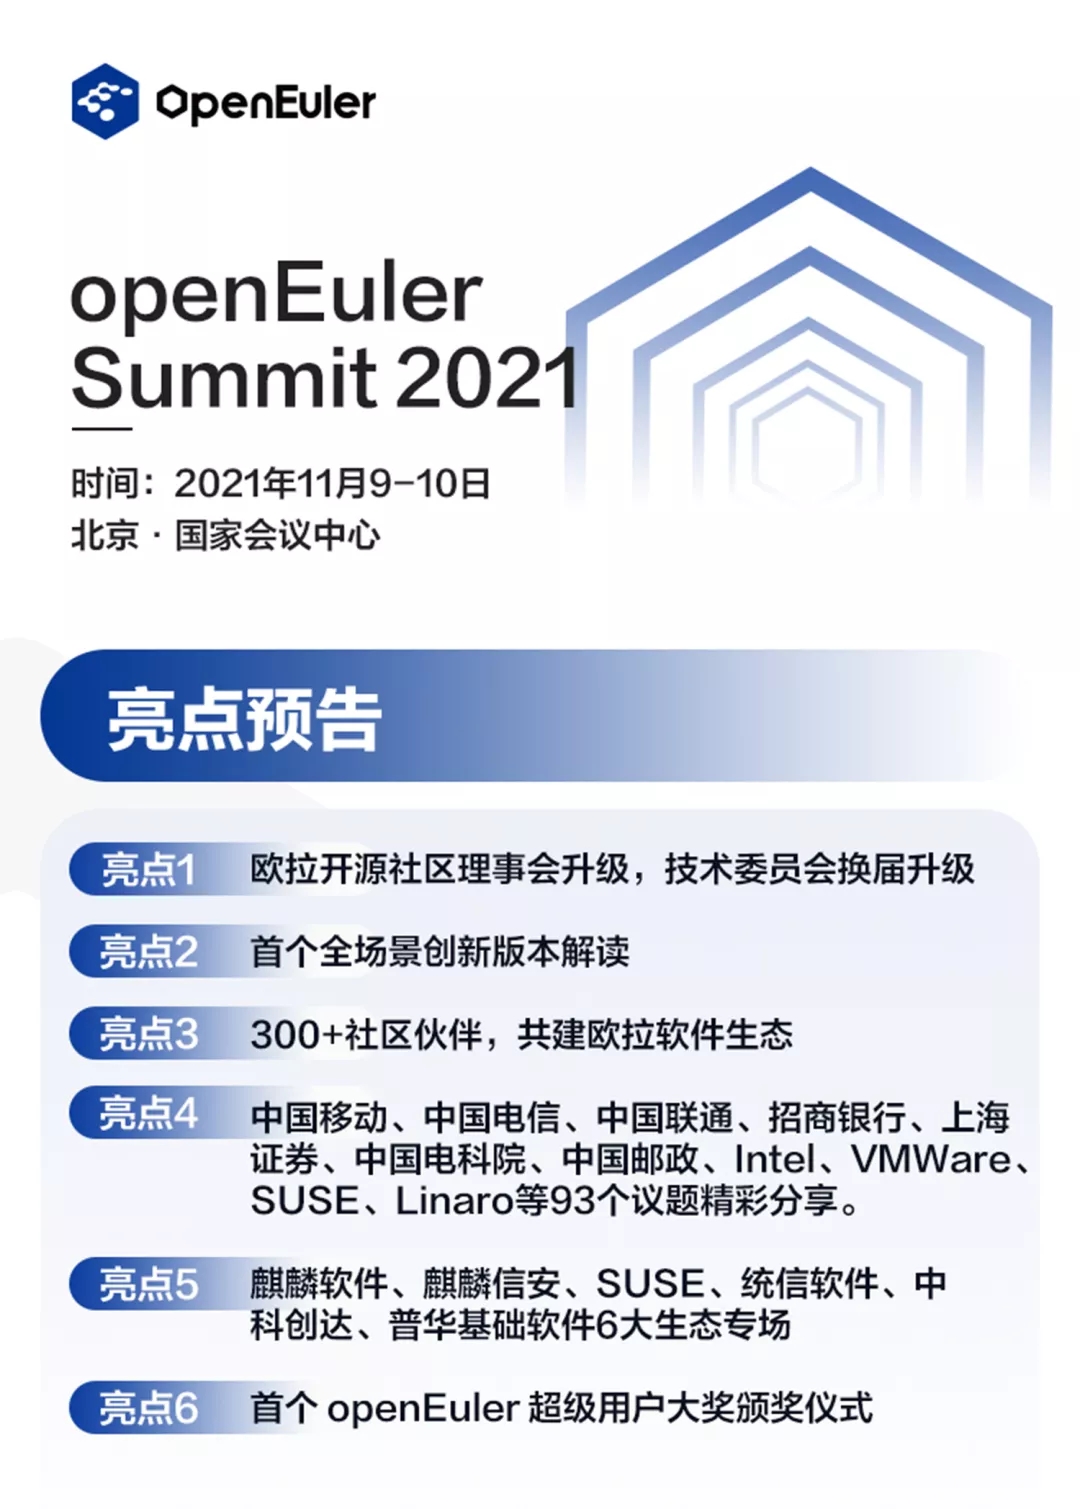 品高云即将亮相openEuler Summit 2021